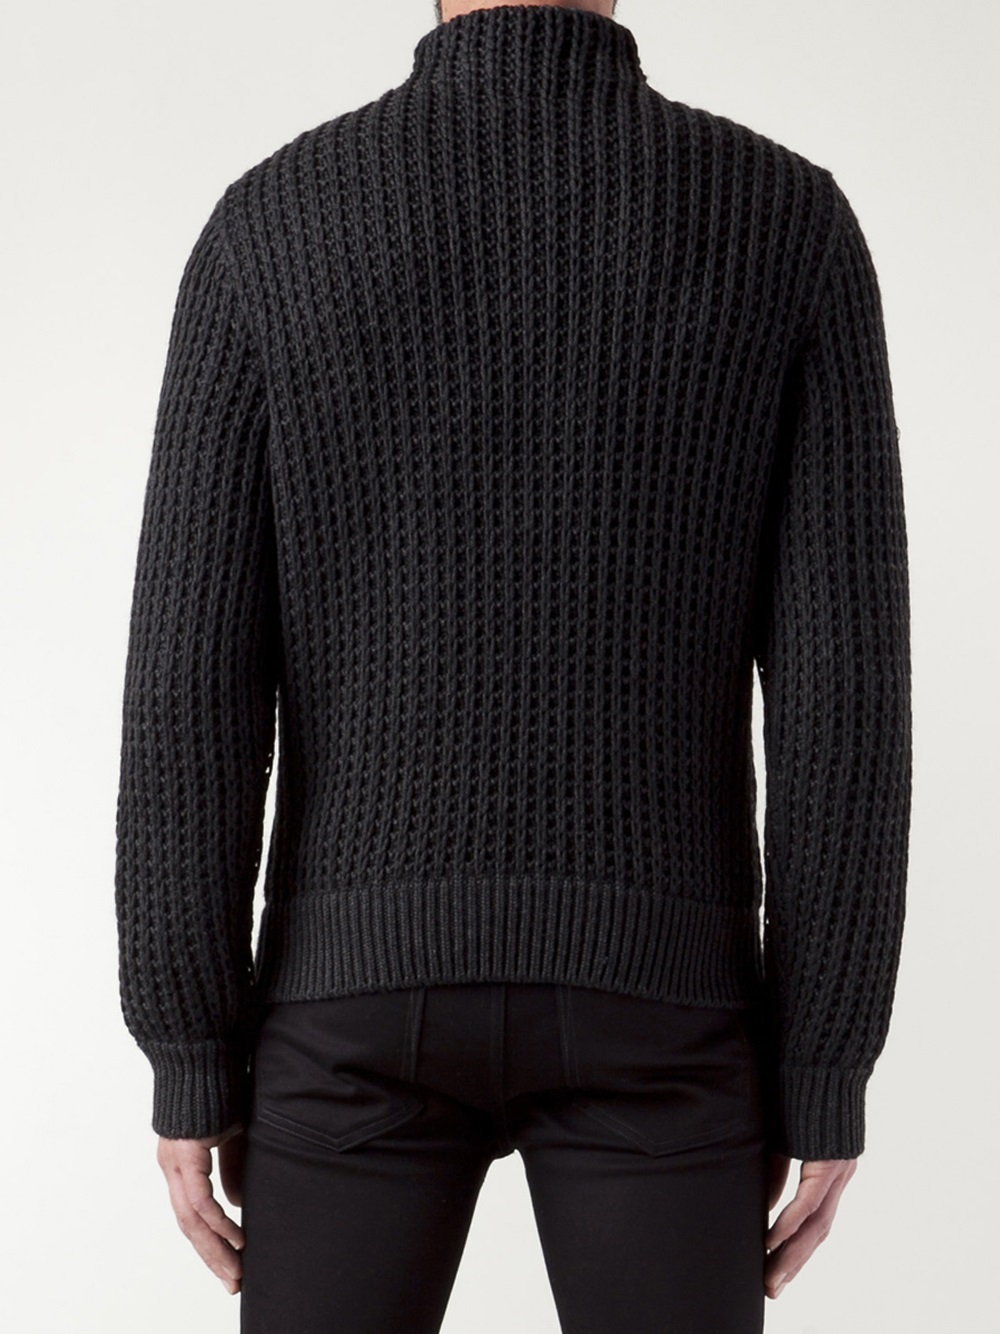 Lyst - Calvin Klein Chunky Turtleneck Sweater in Gray for Men